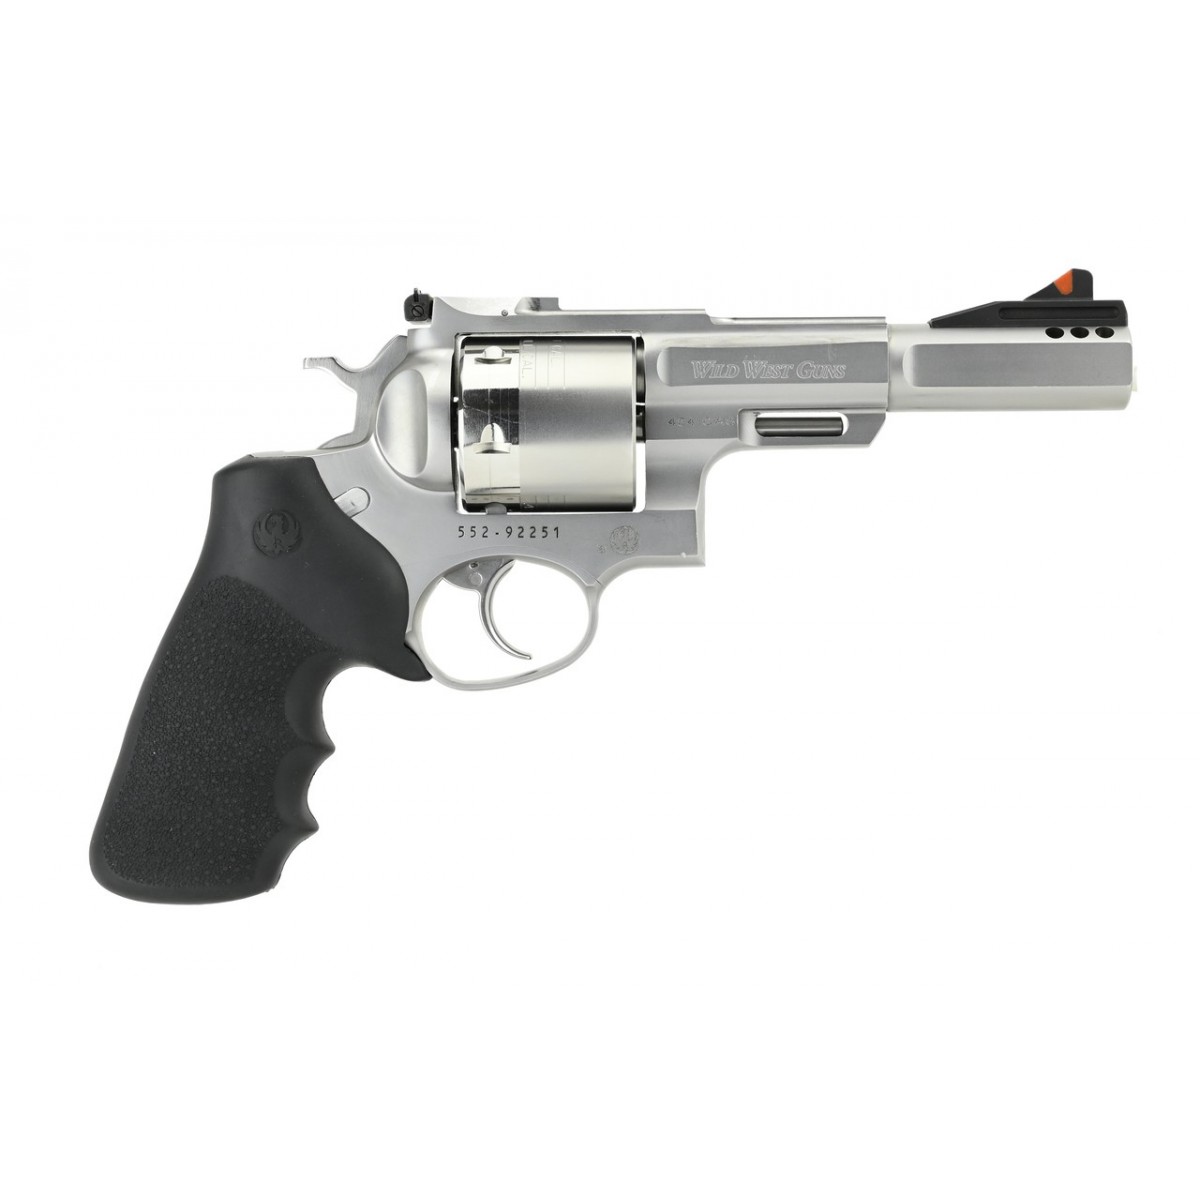 Ruger Wild West Wolverine .45LC/454 caliber revolver for sale.